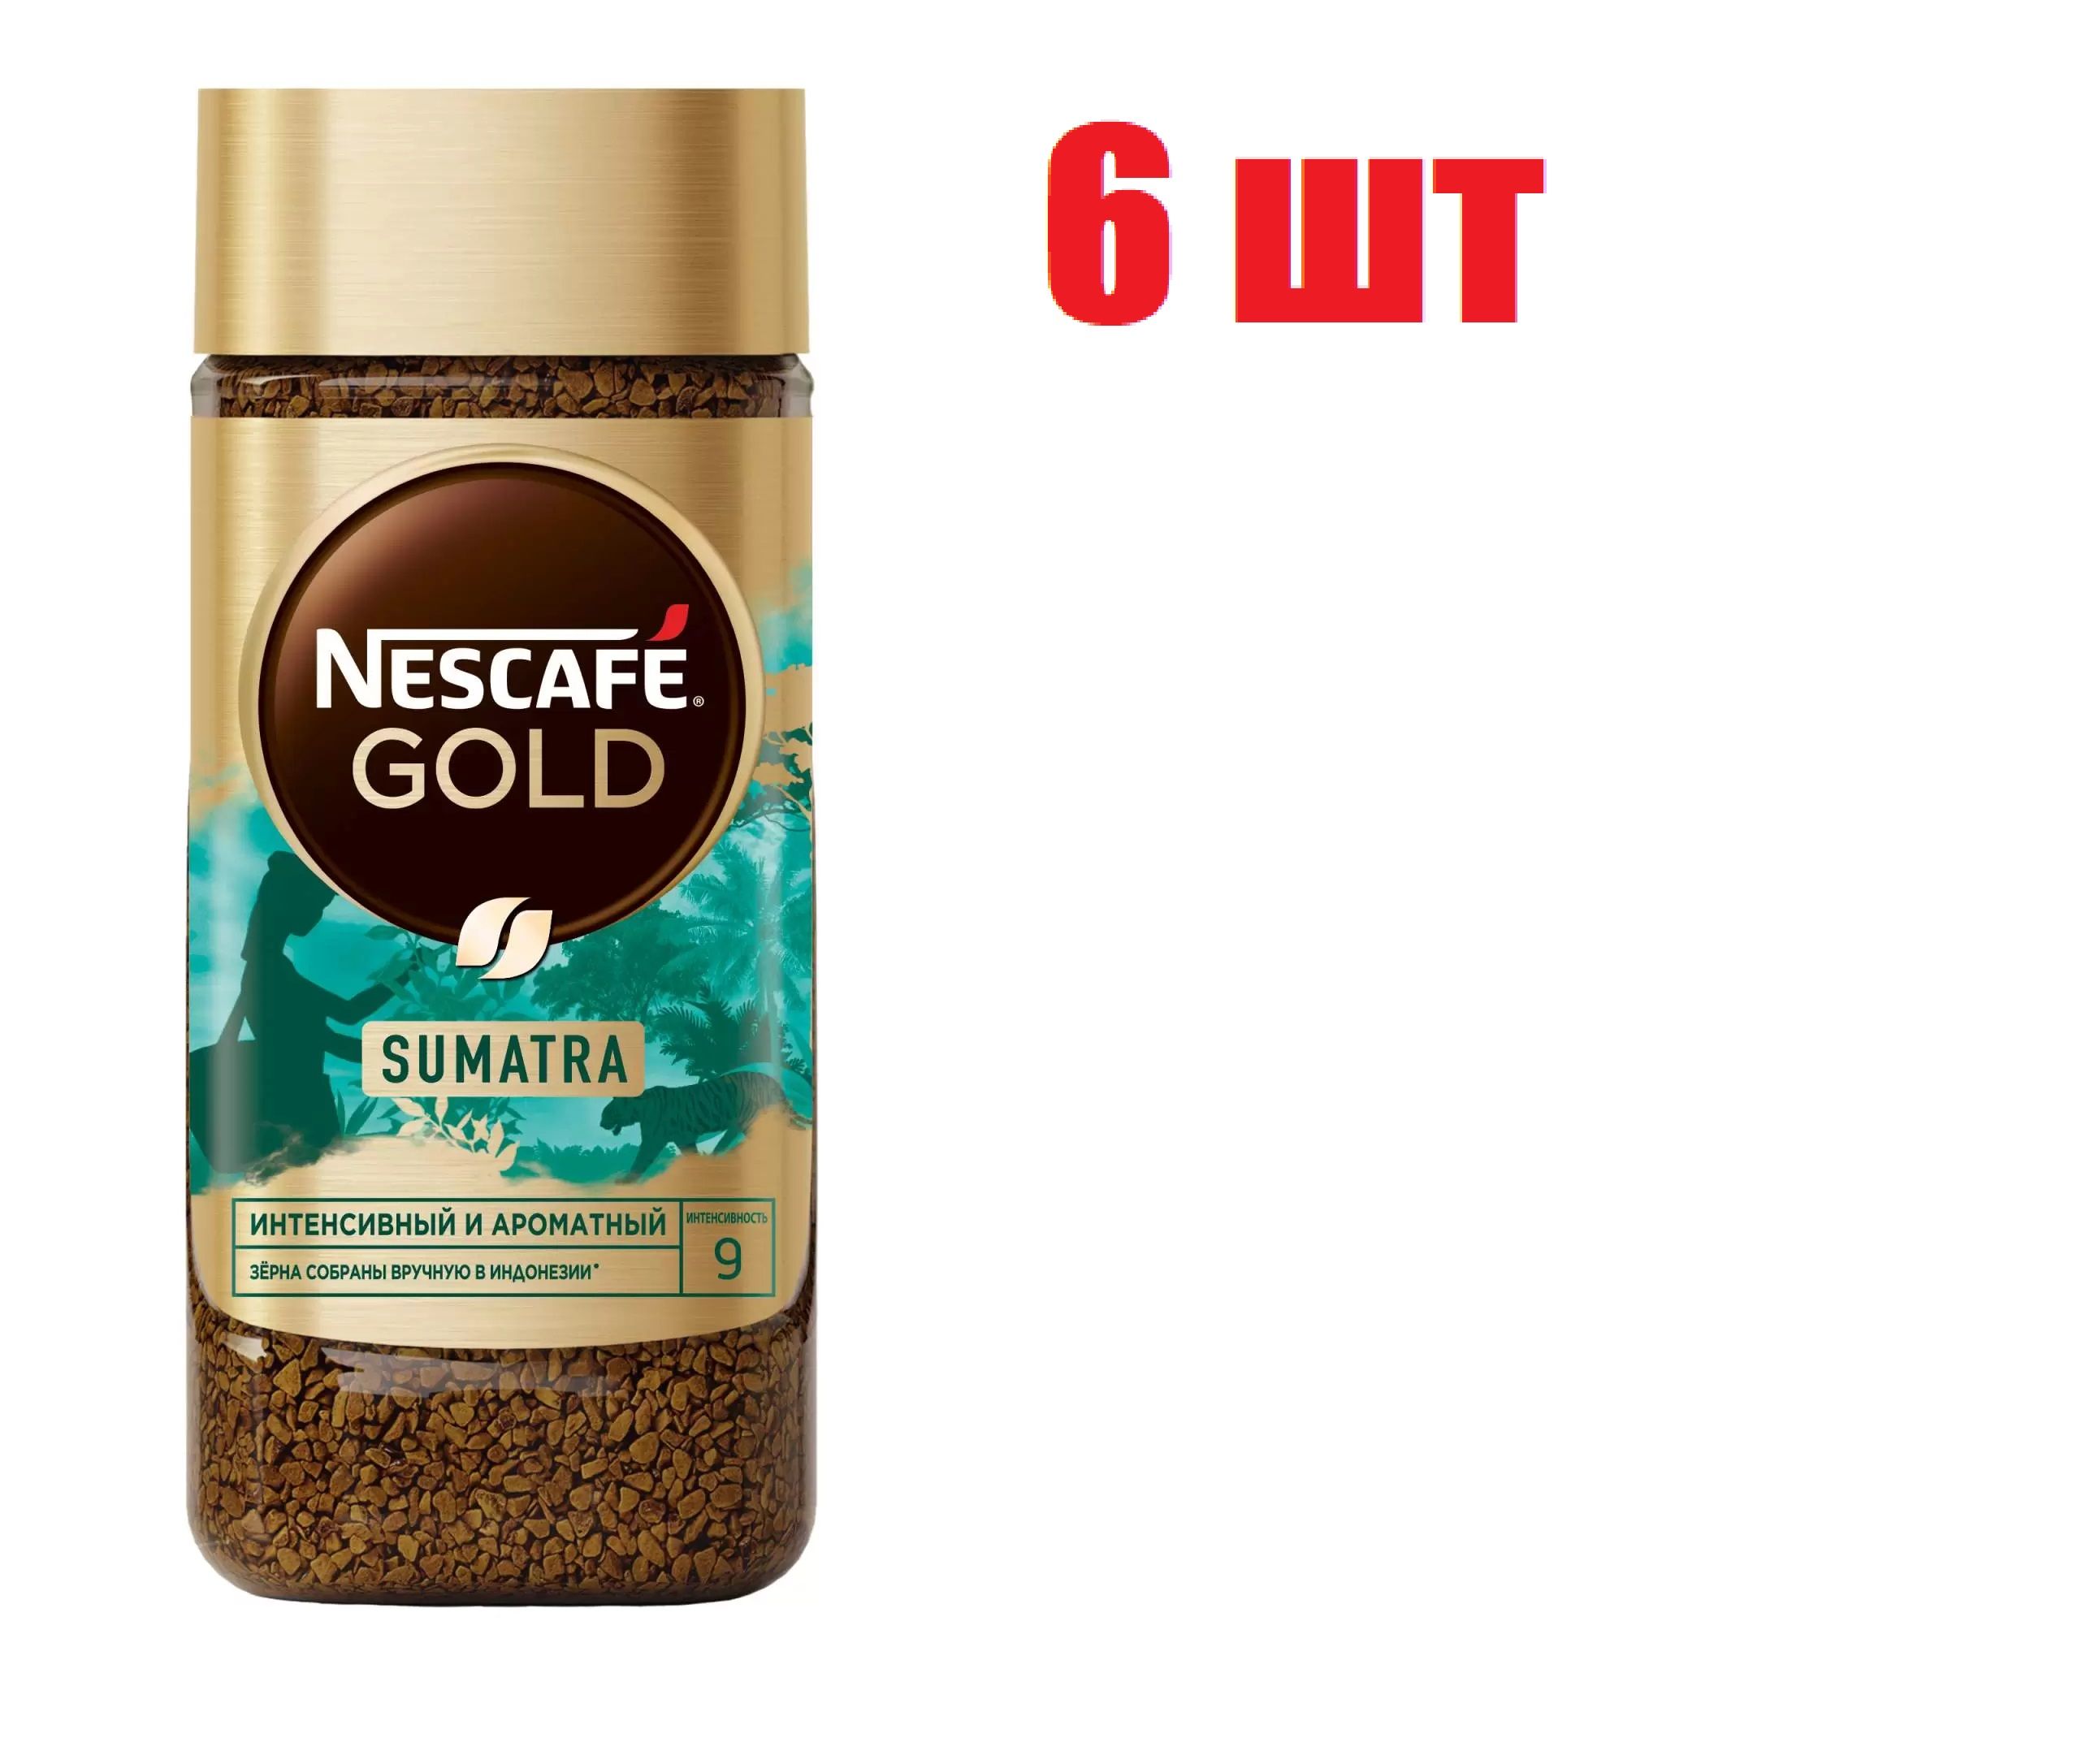 Nescafe gold aroma intenso. Нескафе Голд Origins Sumatra 170гр.